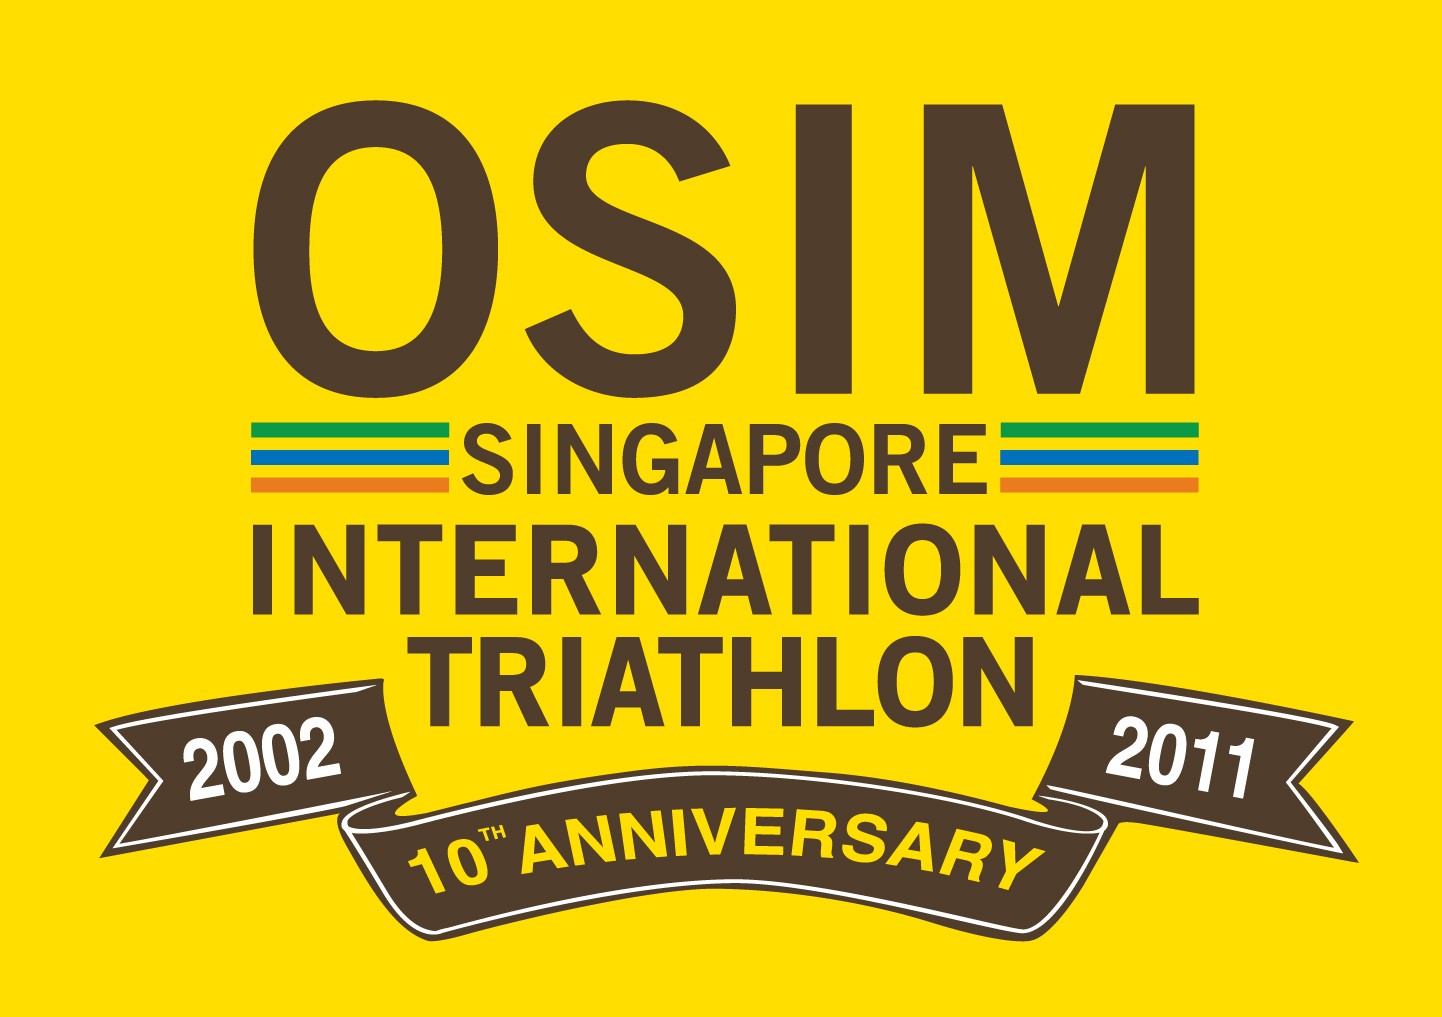 http://3.bp.blogspot.com/-jZF40GYfXzE/TjYV9b1IohI/AAAAAAAABdw/LkEzz3YE_E4/s1600/OSIM+Singapore+International+Triathlon+2011+Winners.jpg